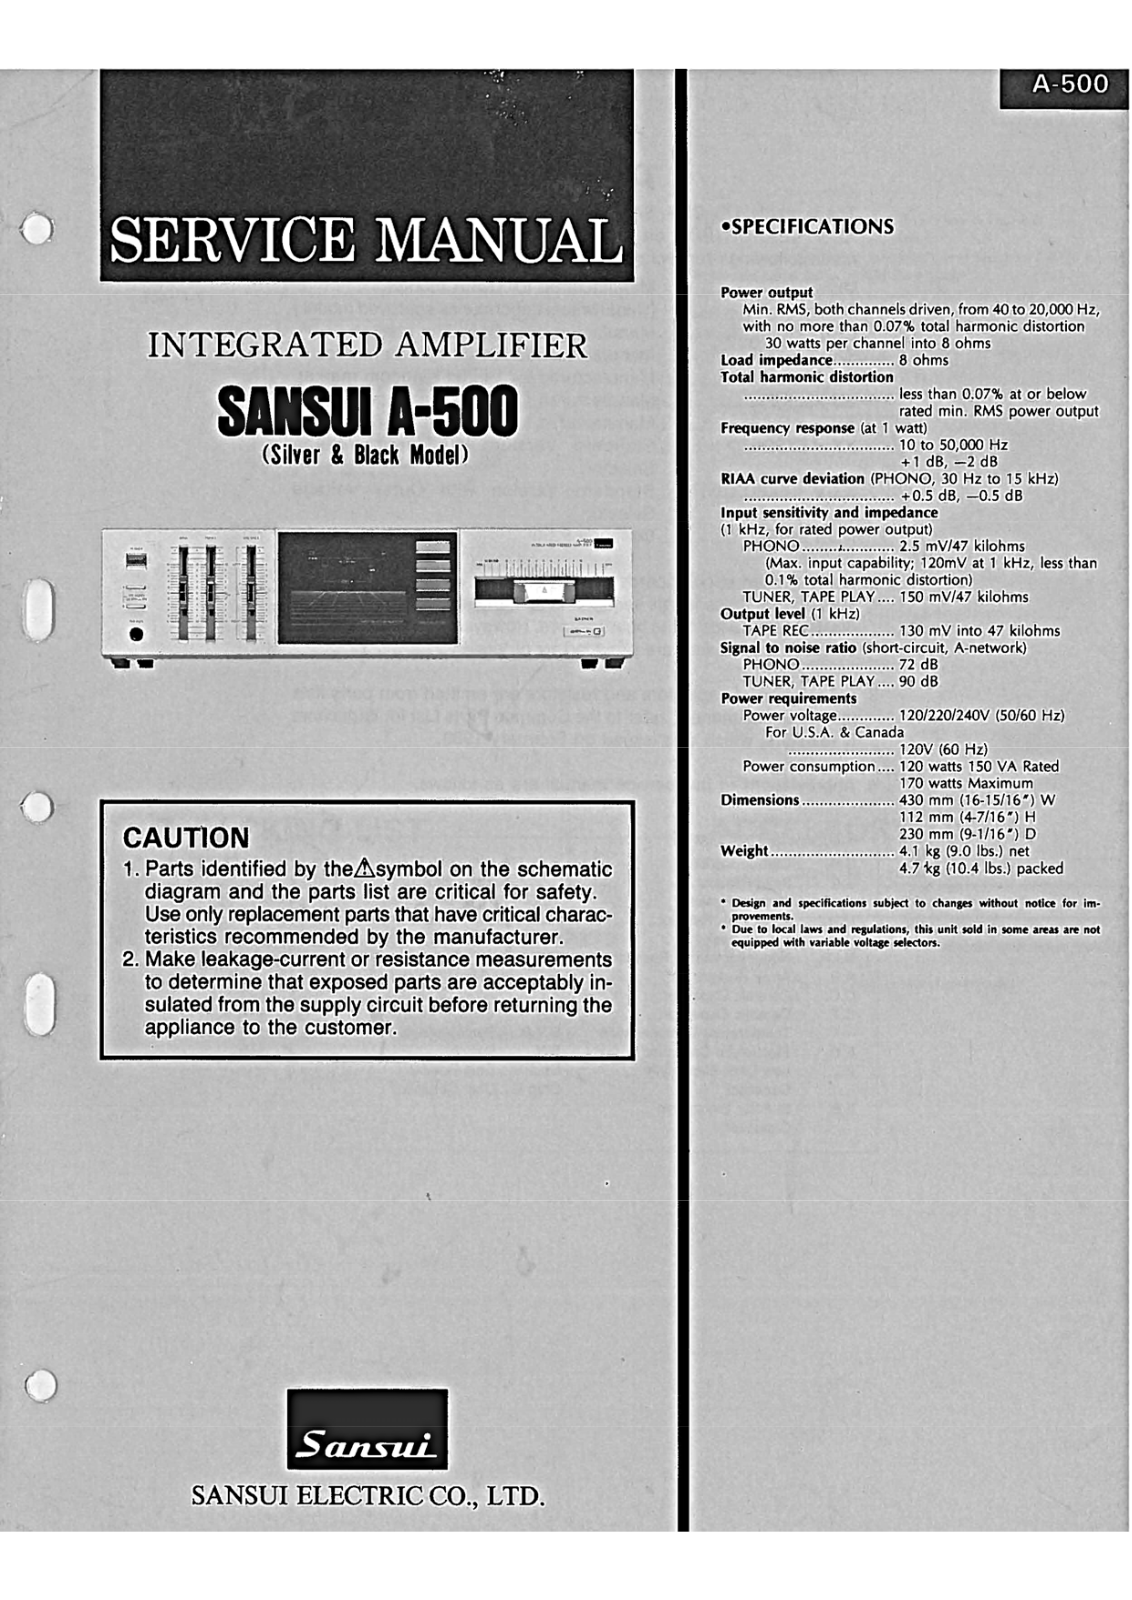 Sansui A-500 Service Manual